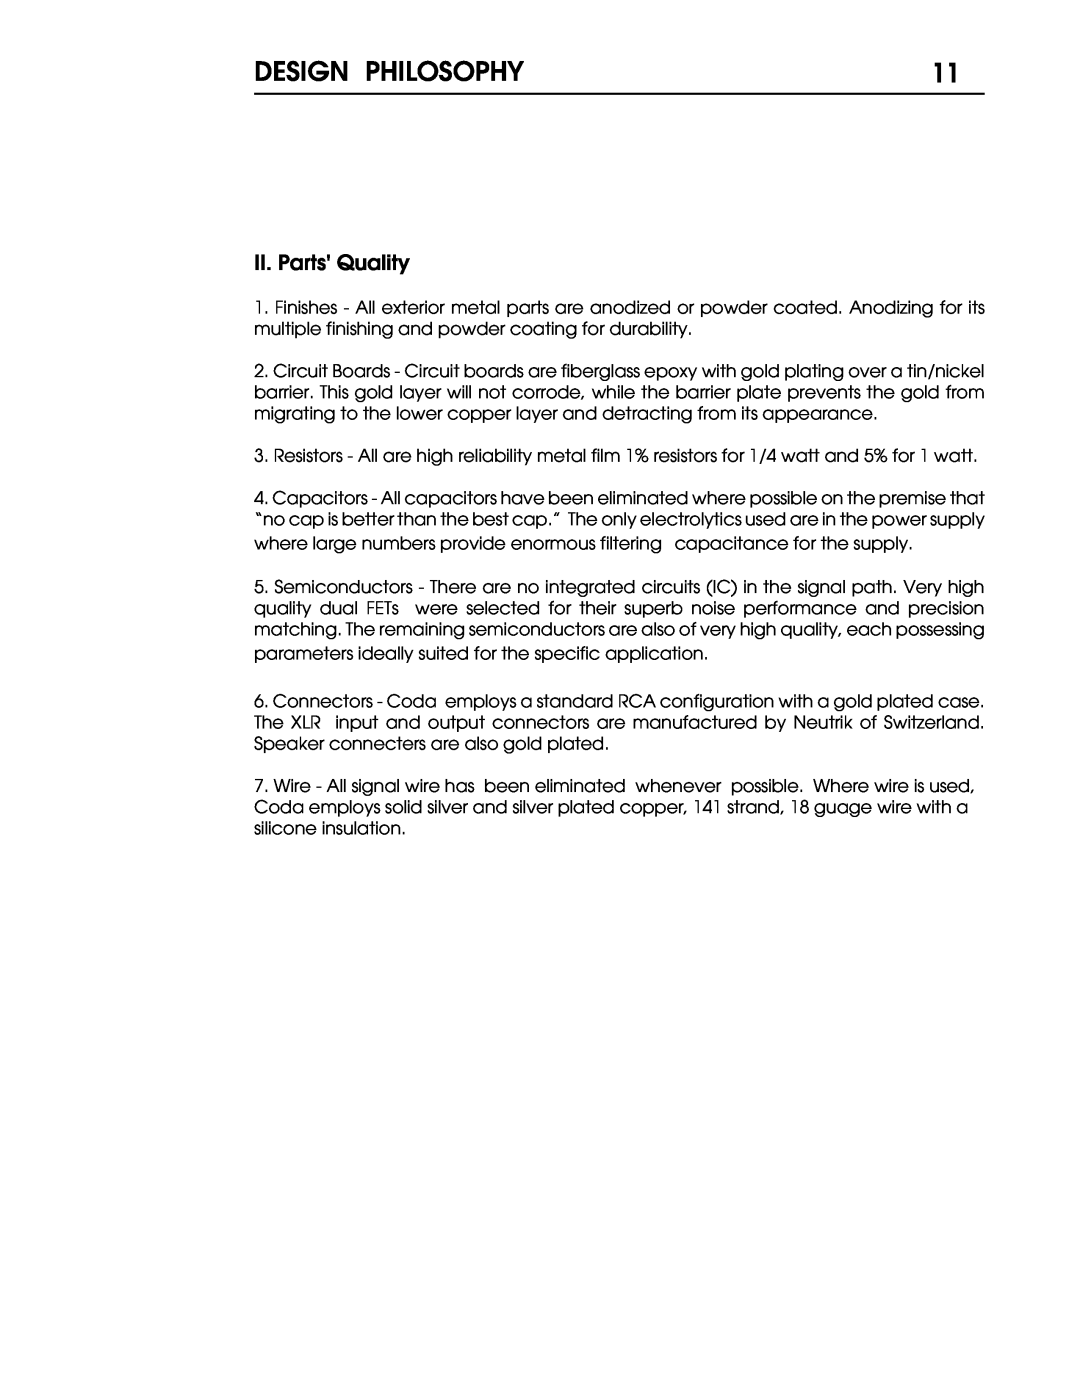 Coda 10.5 operation manual Design Philosophy, II. Parts Quality 